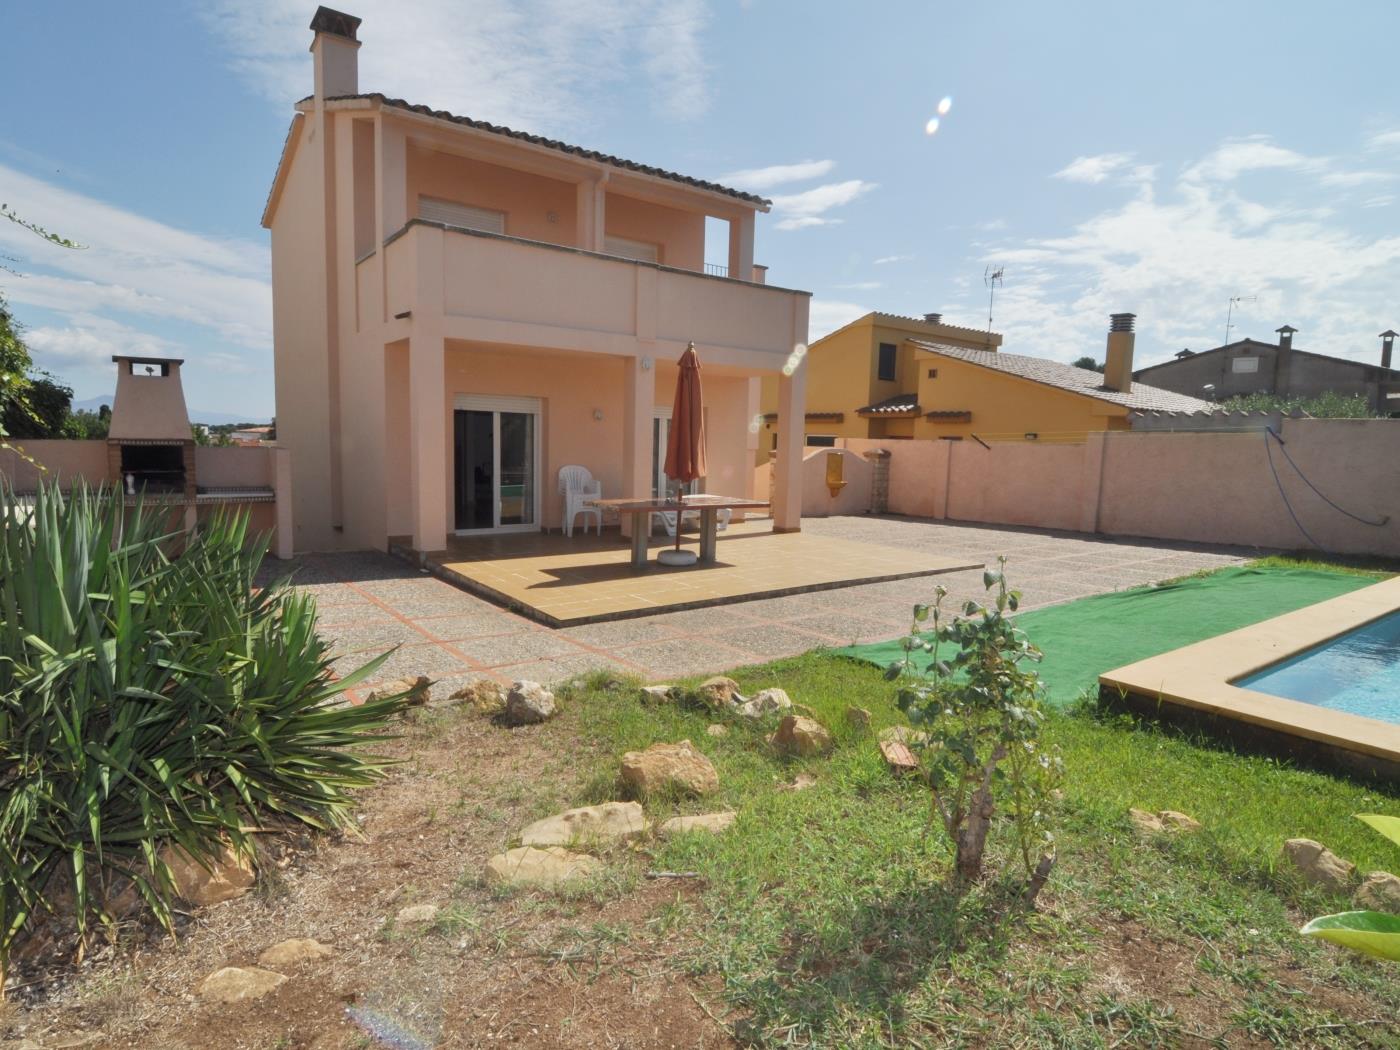 Tere 16: Casa muy espaciosa con piscina privada en l'Escala